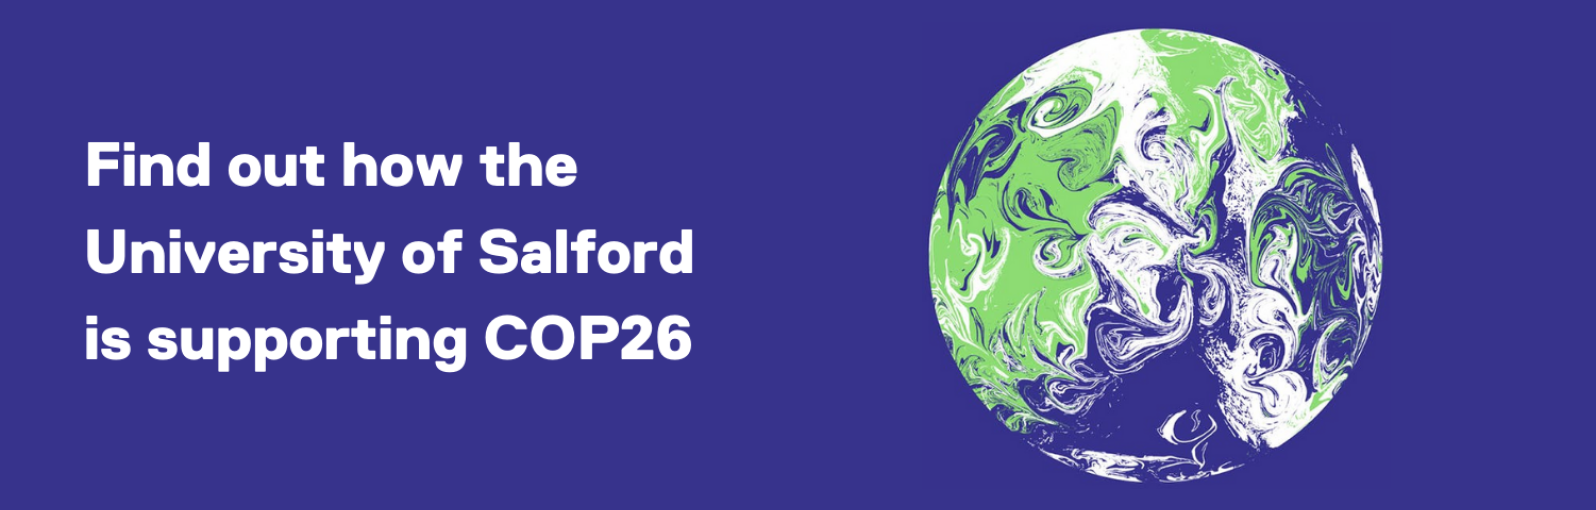 COP26 webpage banner